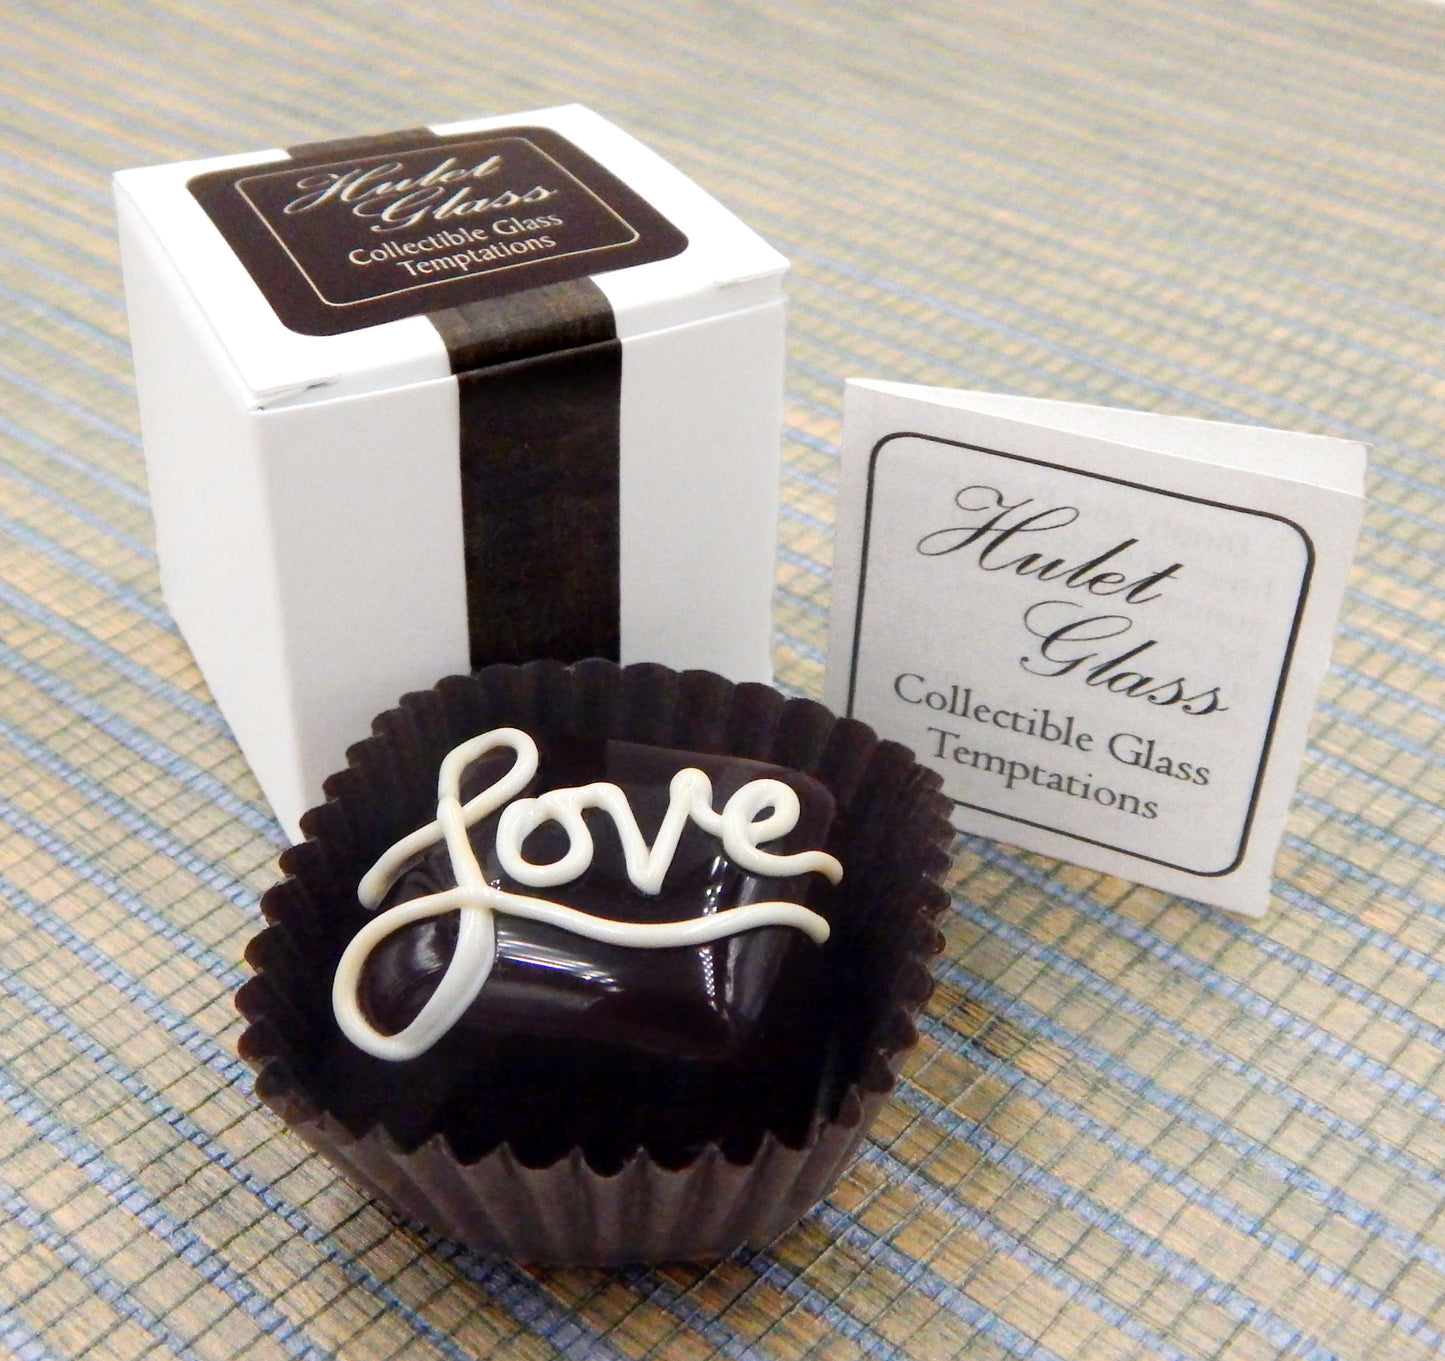 Chocolate & Vanilla "Love" Treat (17-012CV)